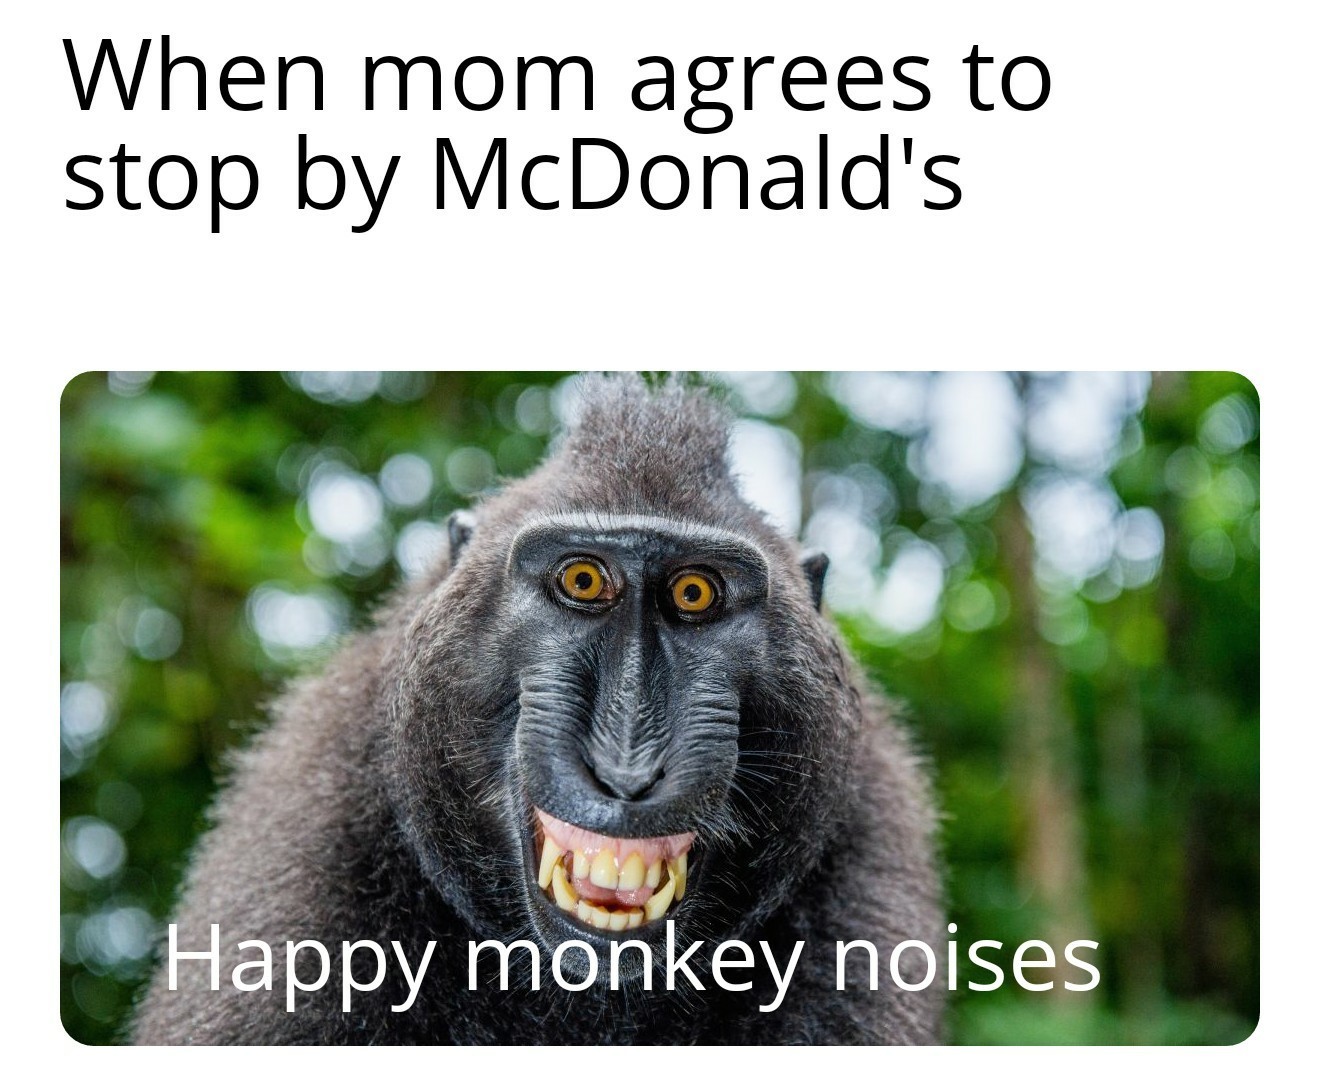 Return to monkey - meme